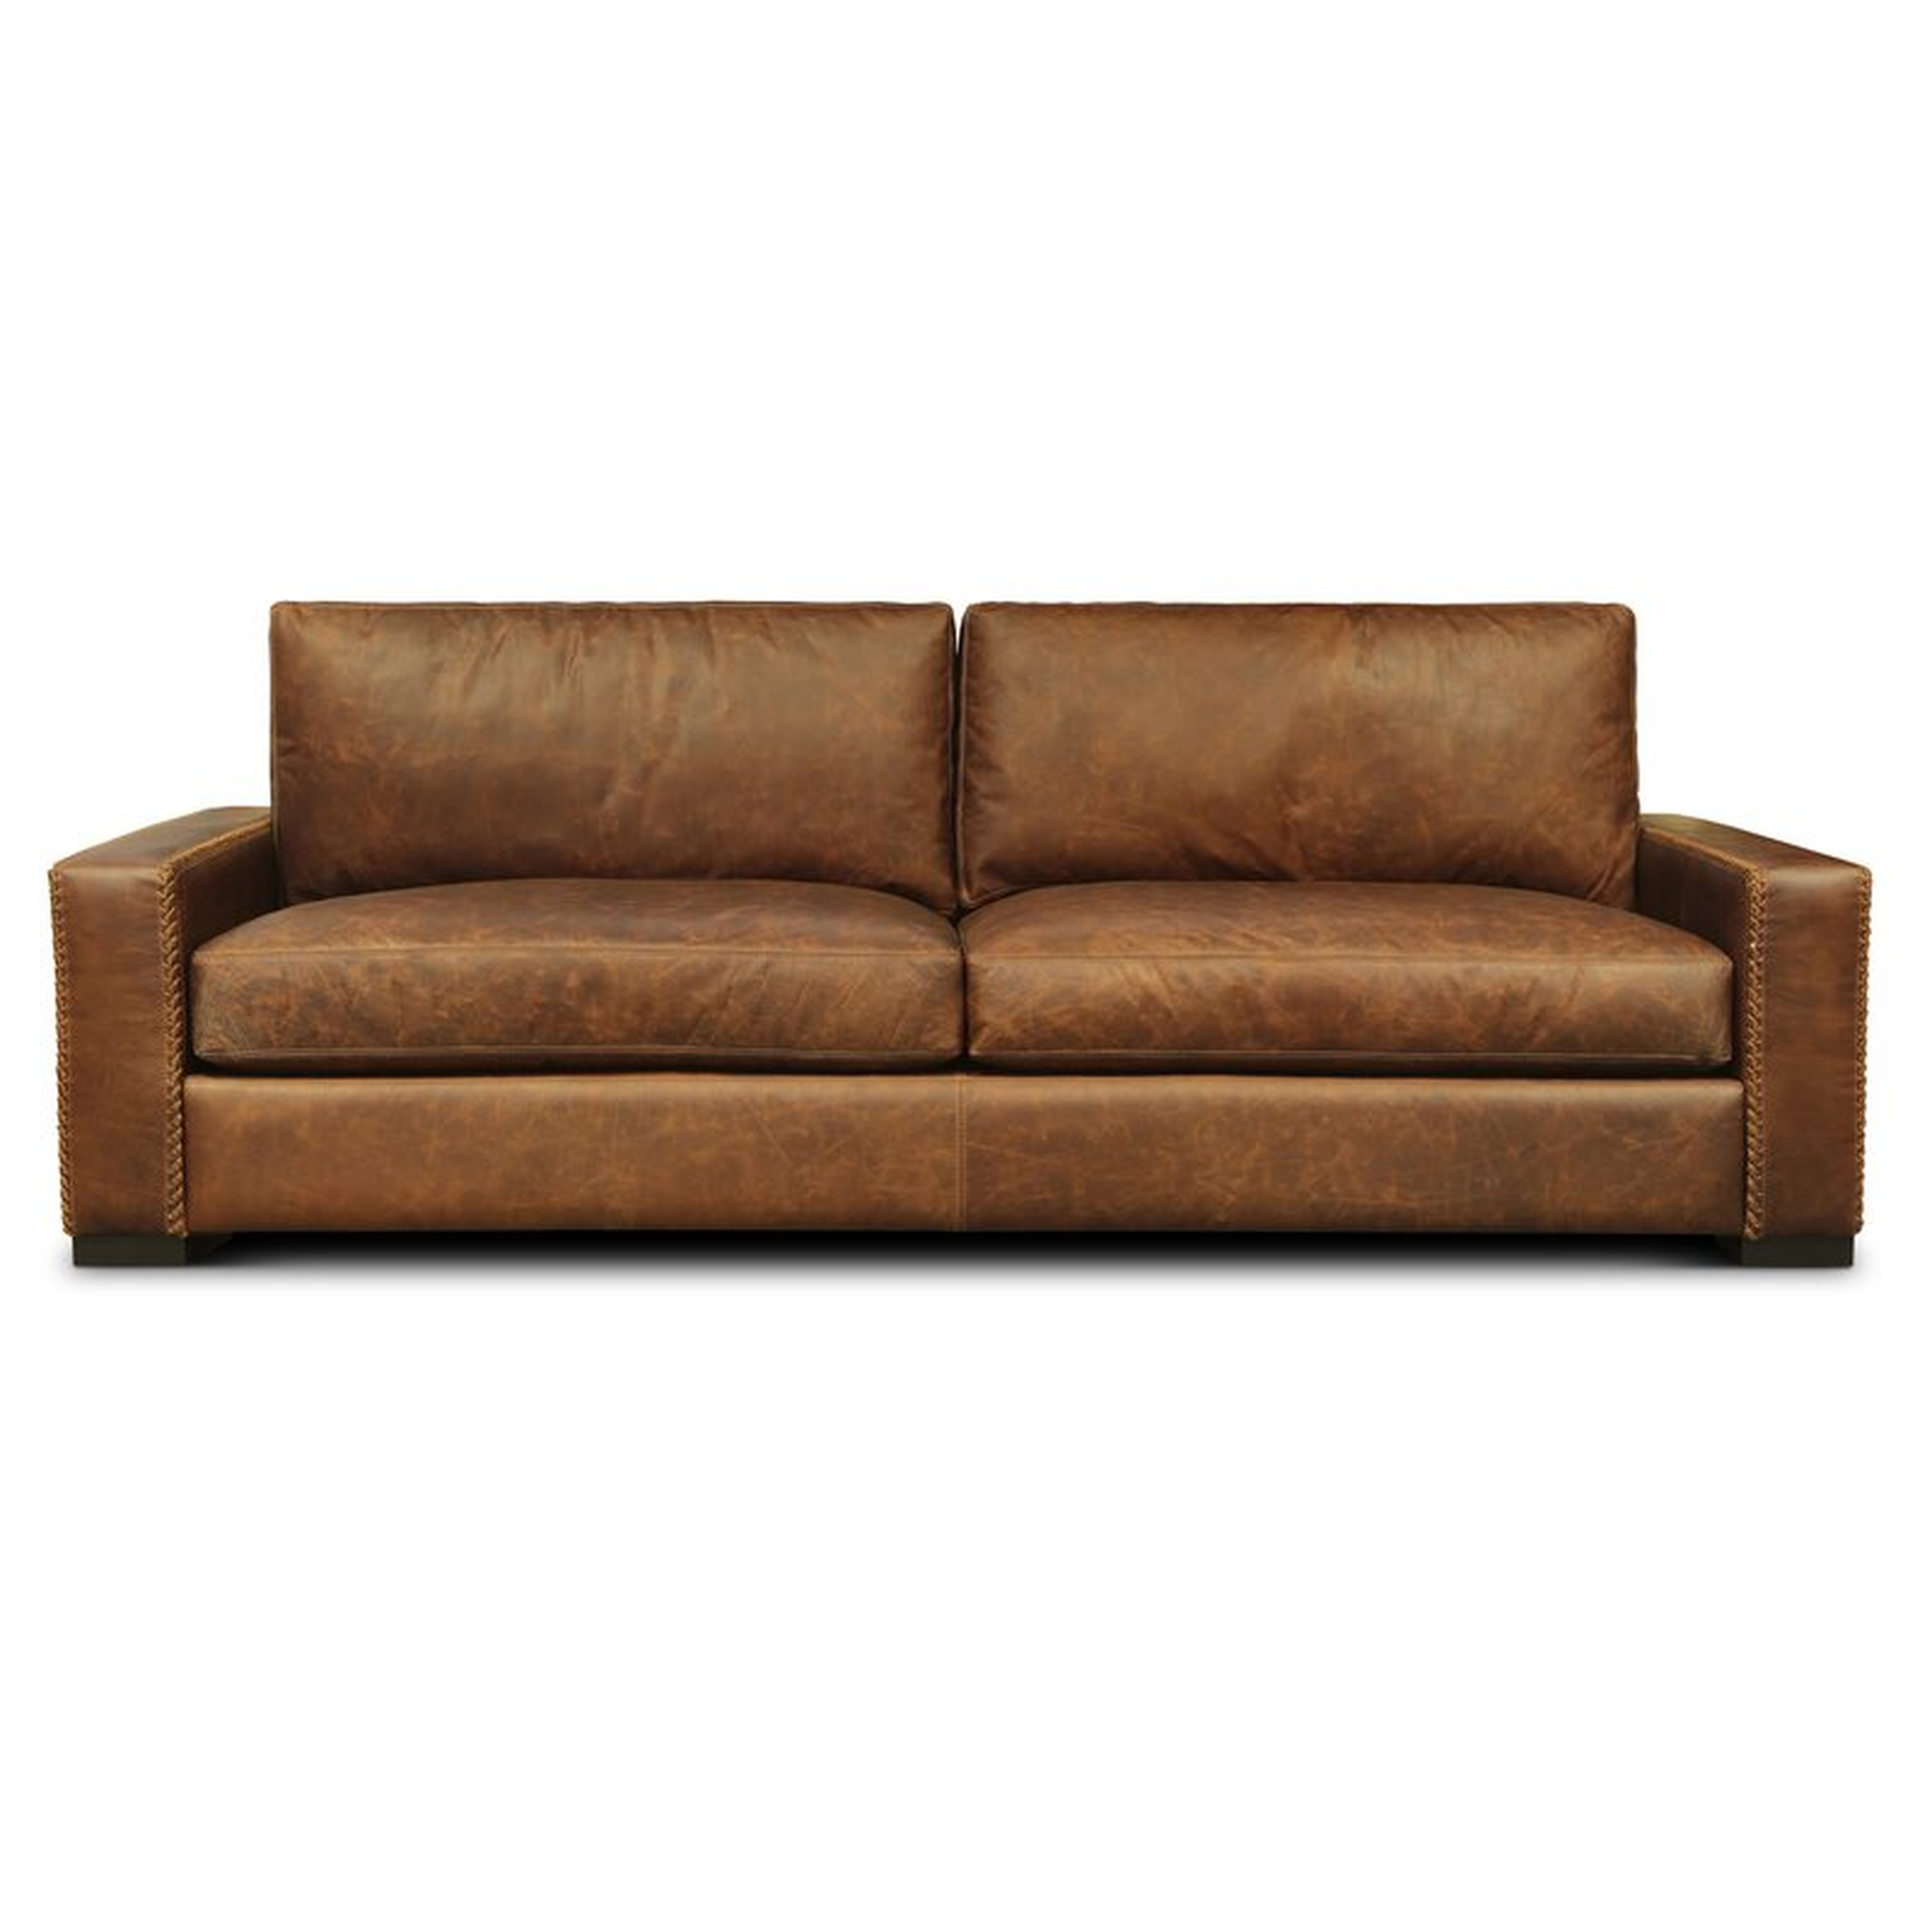 Eleanor Rigby Urban Cowboy Leather Sofa Upholstery Color: Maestro Artisano Camel - Perigold